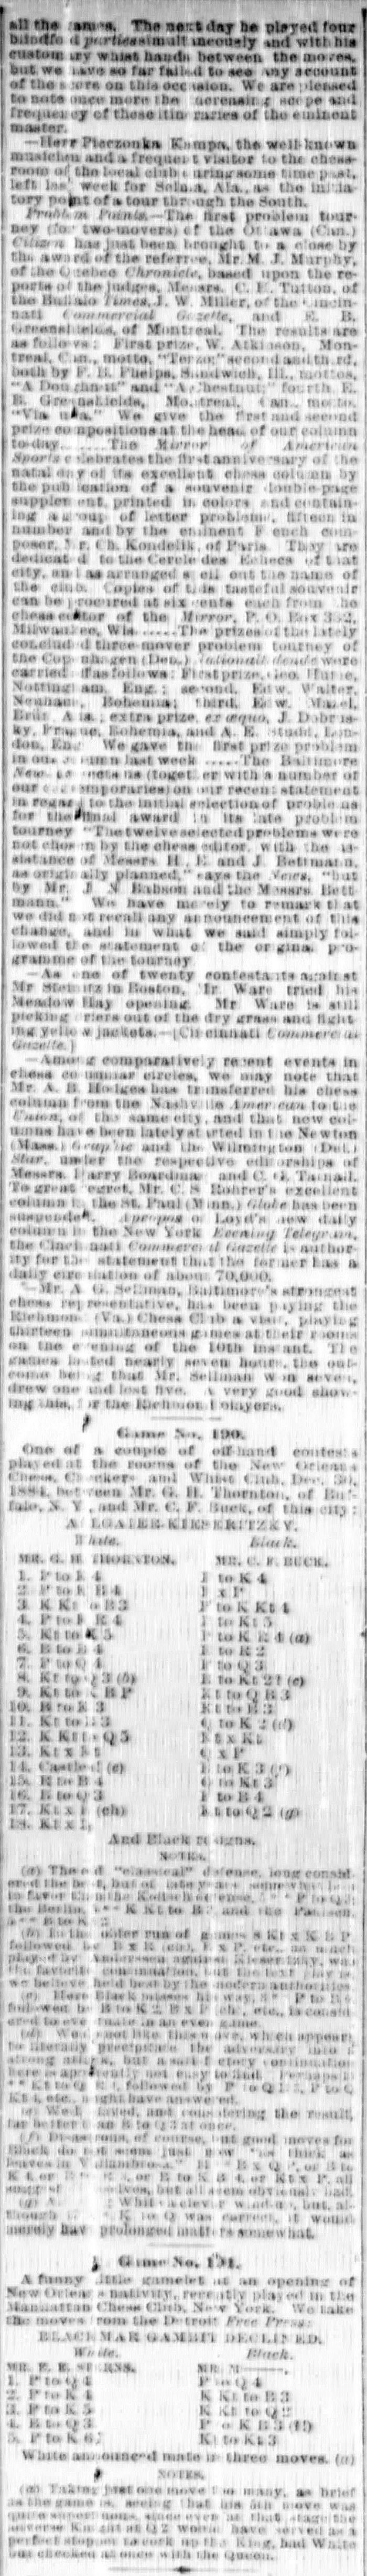 1885.04.19-02 New Orleans Times-Democrat.jpg